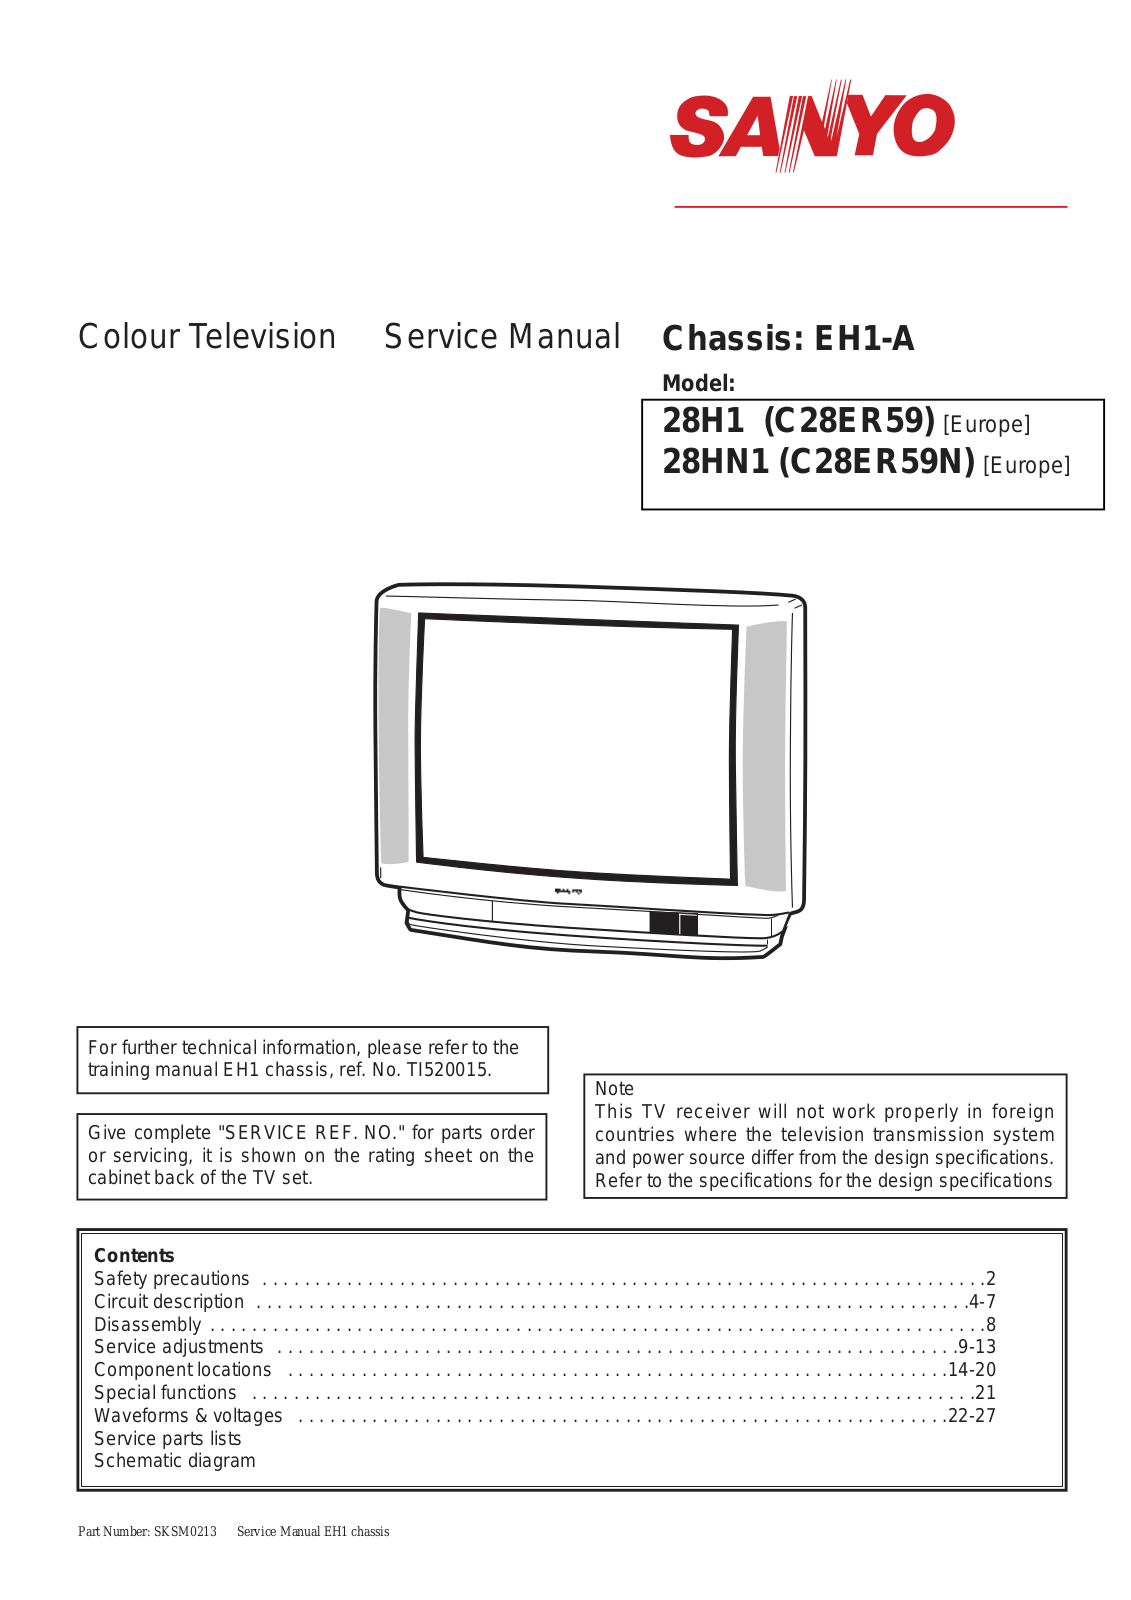 SANYO C28ER59 Service Manual